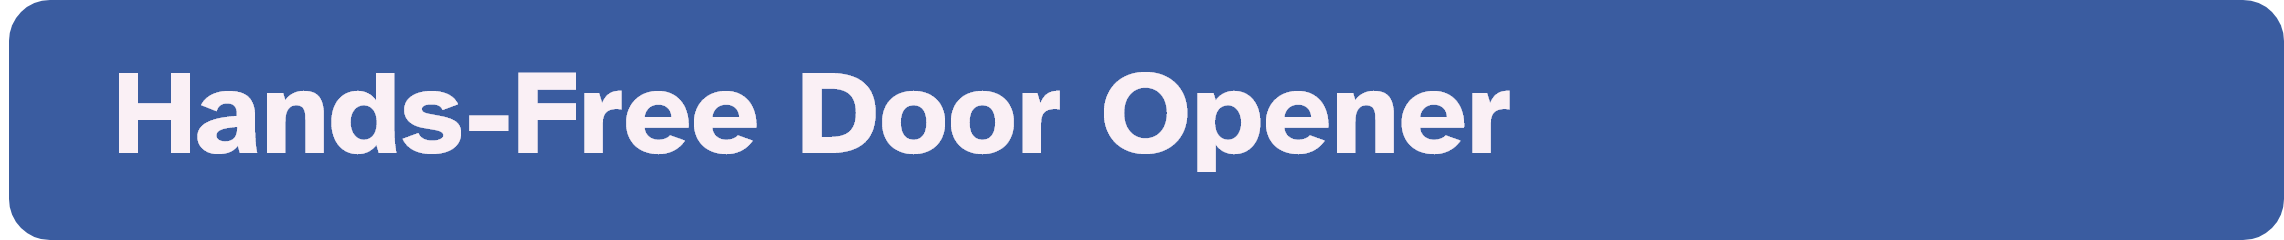 Blue banner with text that reads: Hands-Free Door Opener